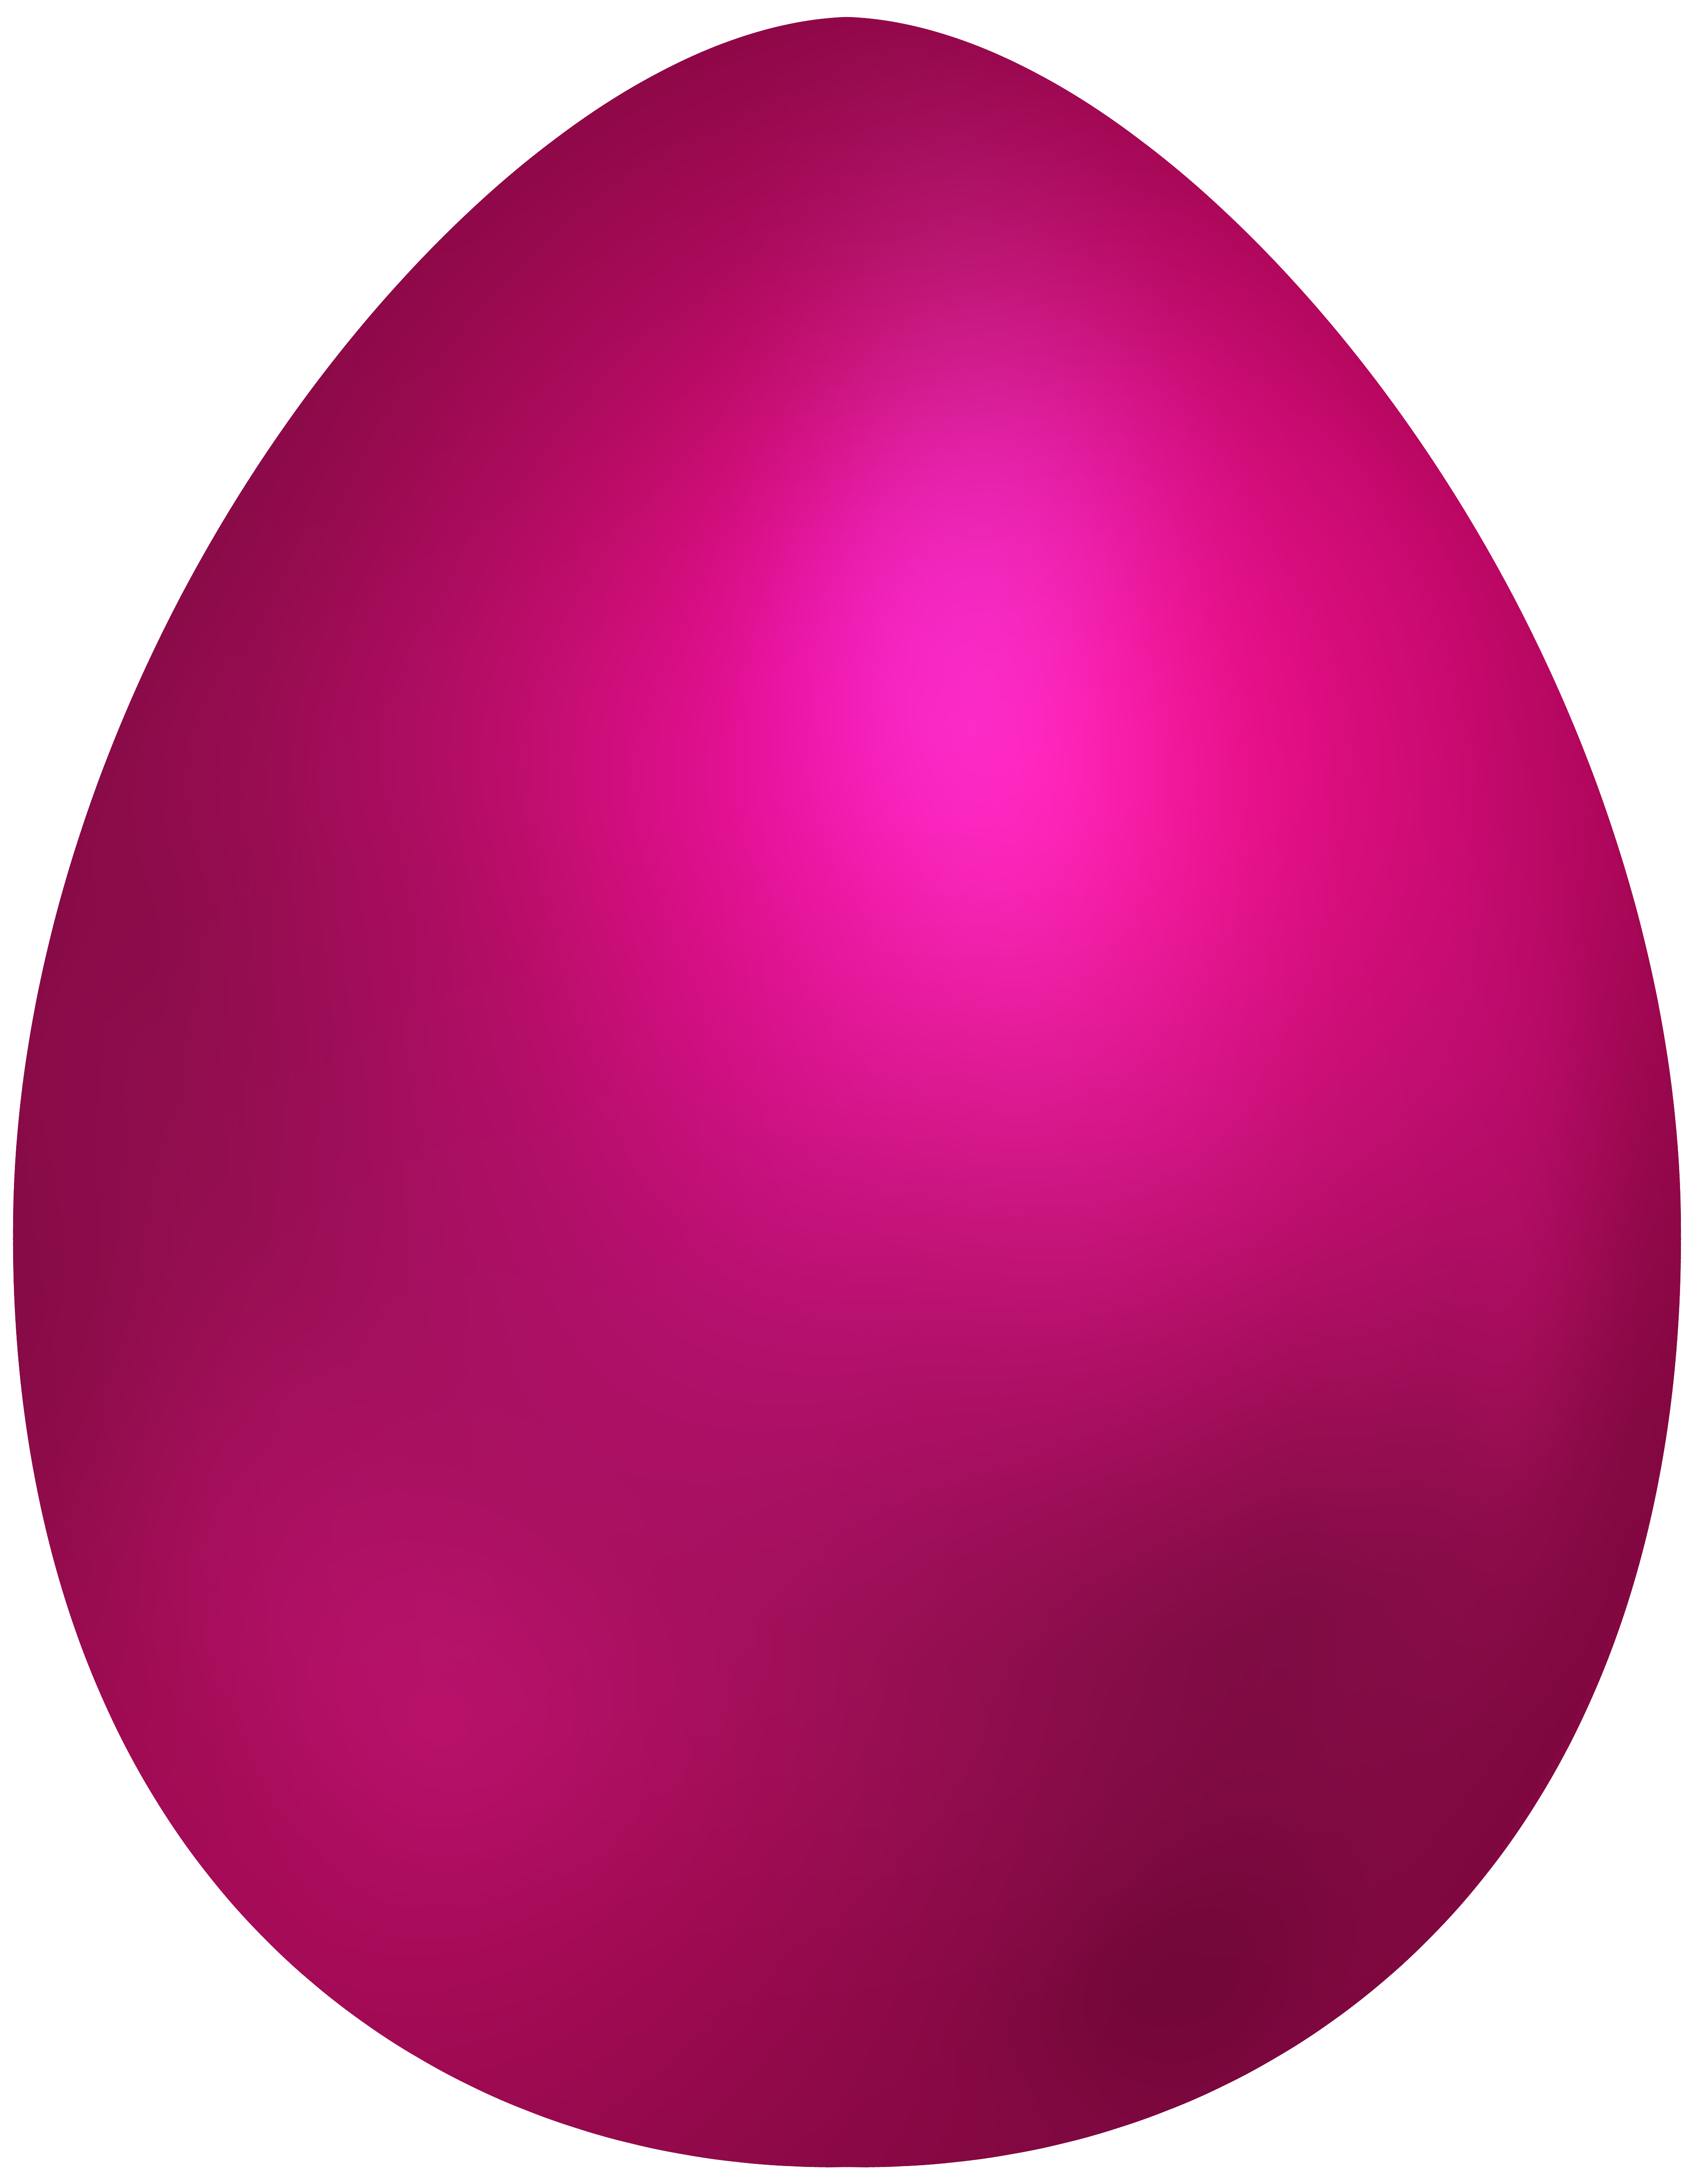 Pink Easter Egg PNG Clip Art - Best WEB Clipart